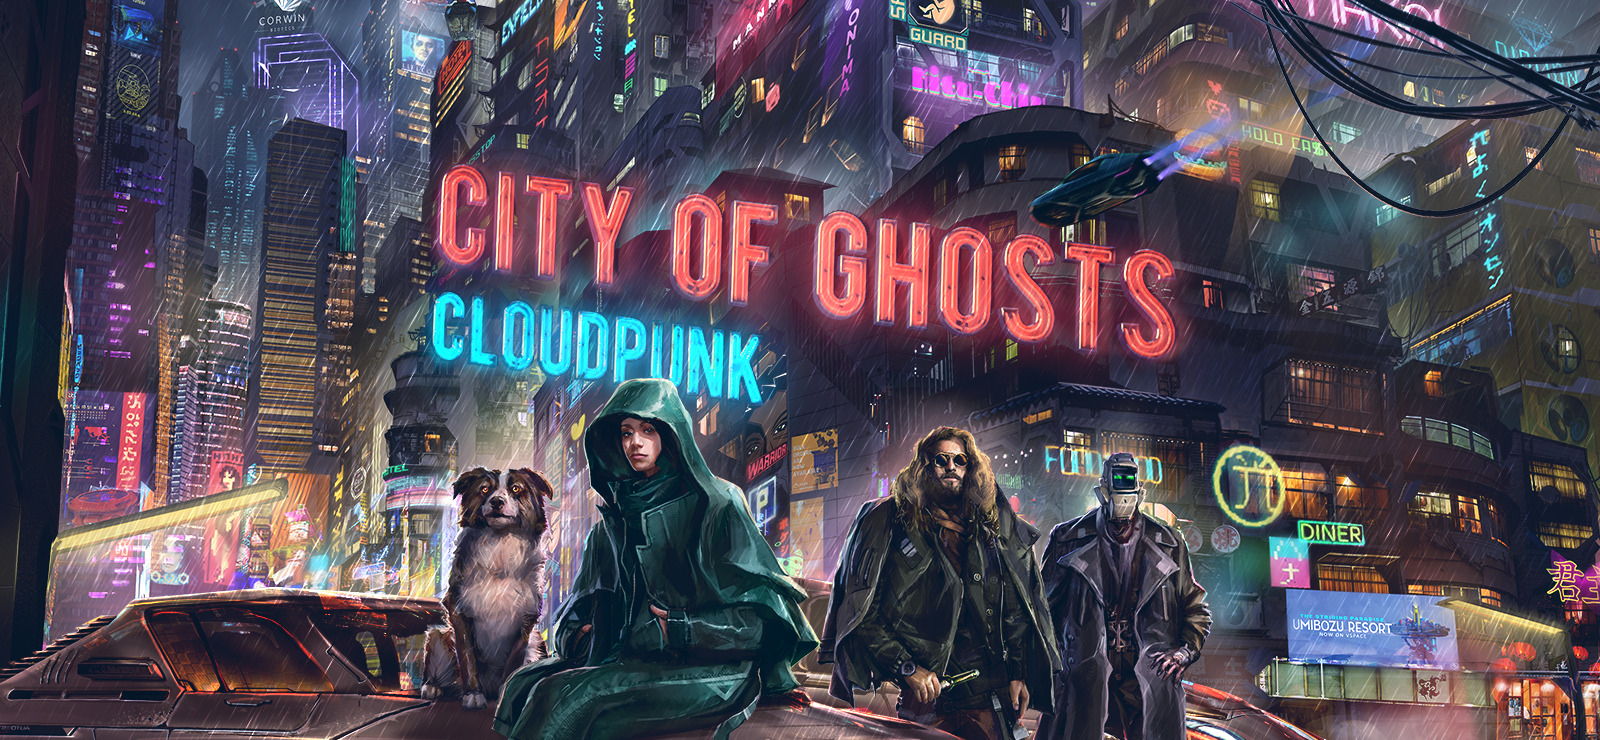 cloudpunk city of ghosts release date